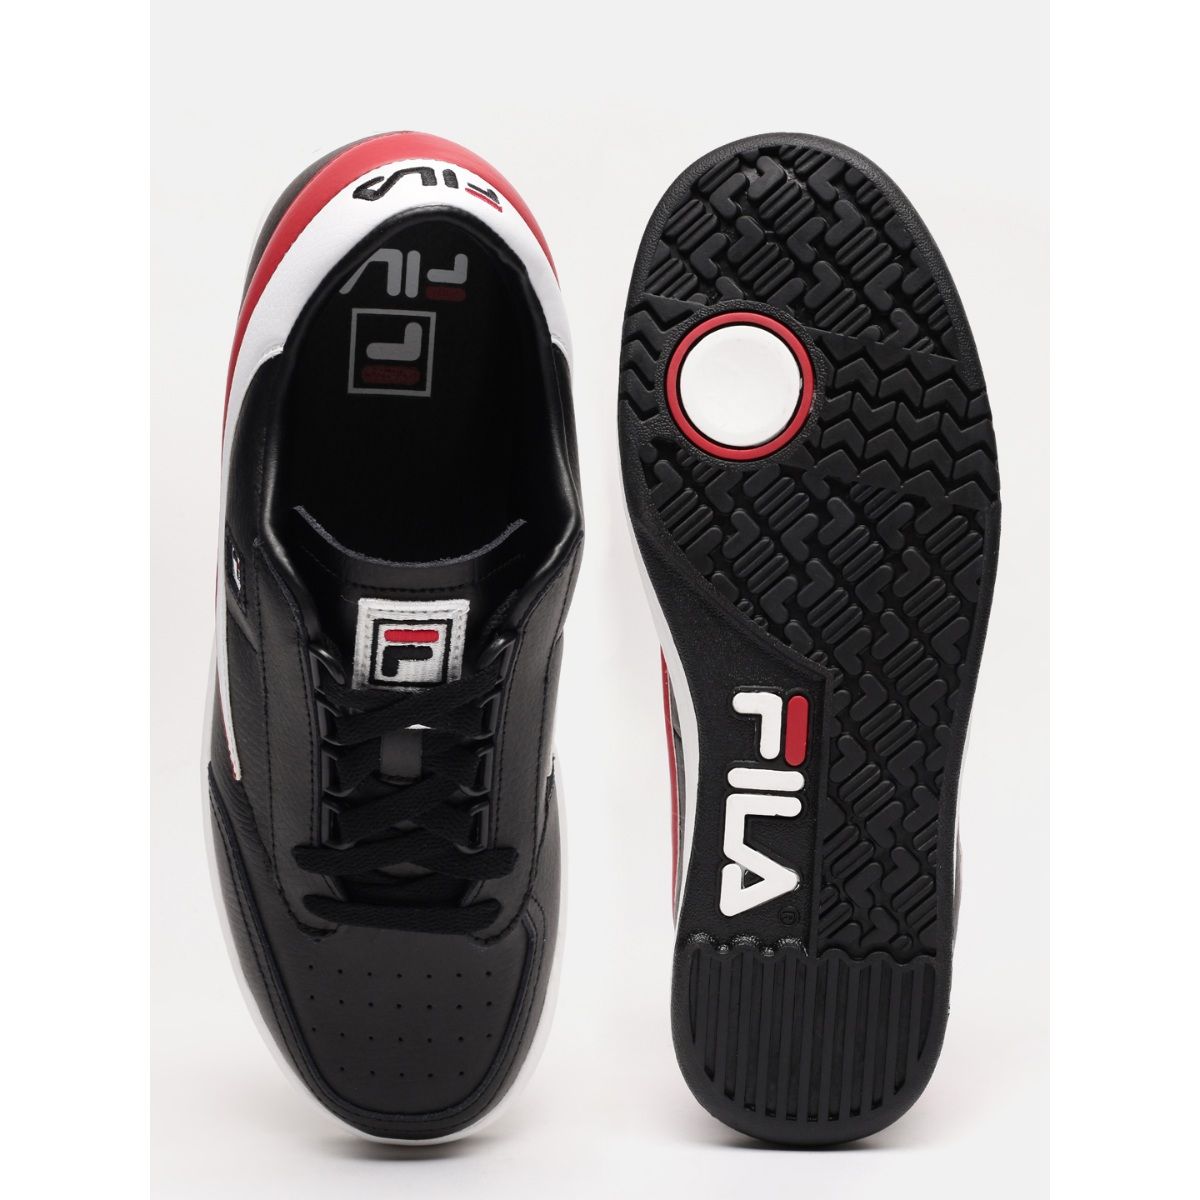 Fila Original Fitness Men's Sneakers Black/White/Red